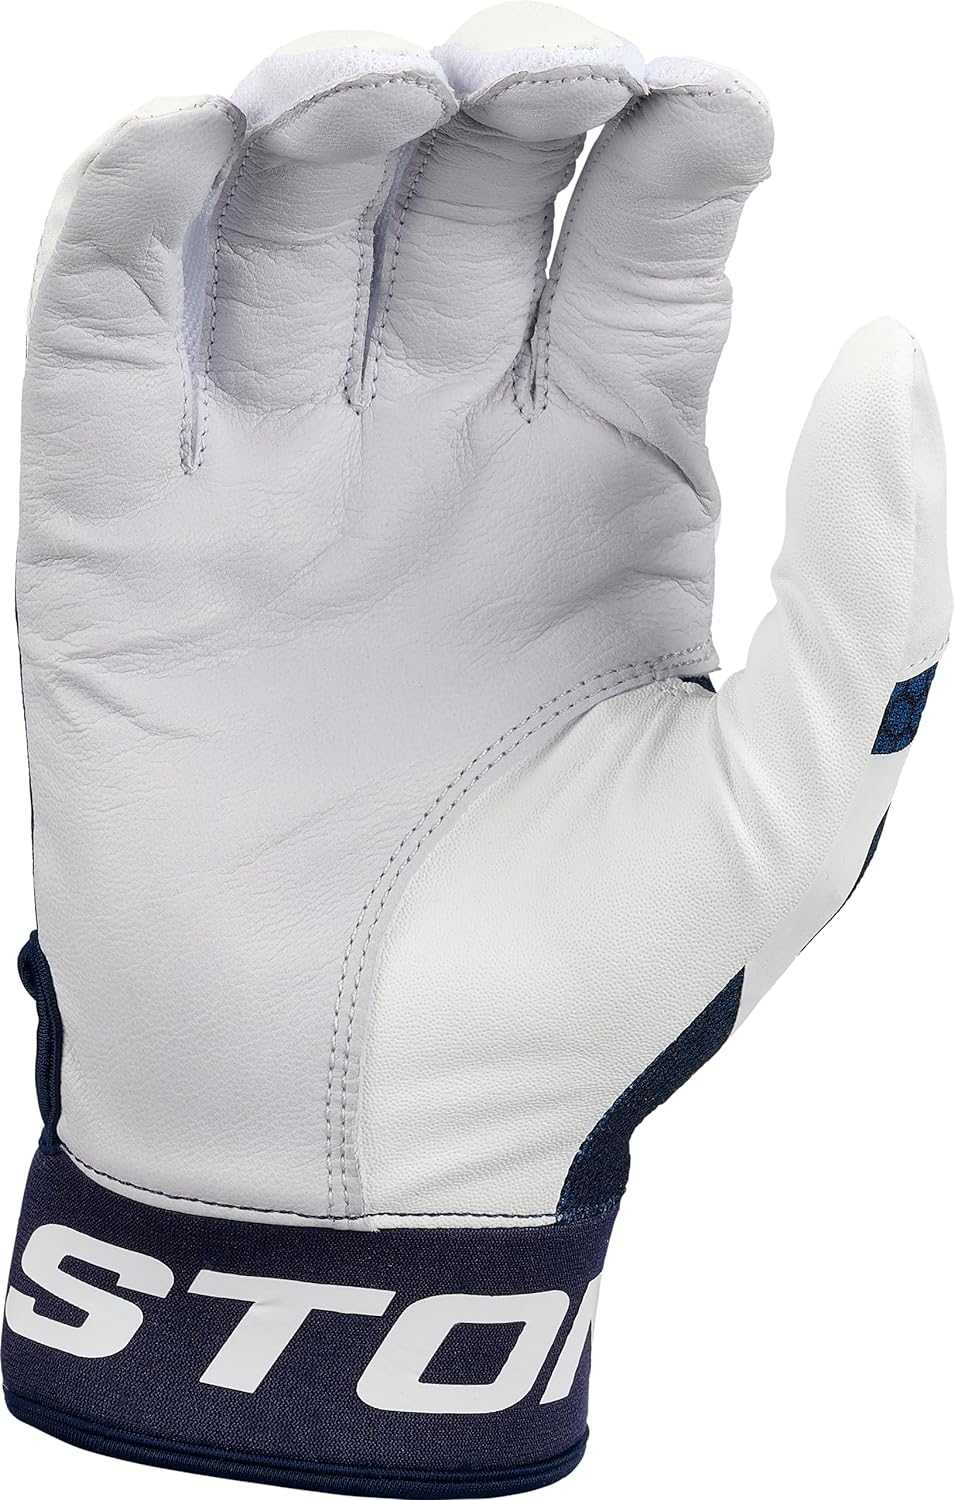 Easton MAV GT Youth Batting Gloves - White Navy - HIT a Double